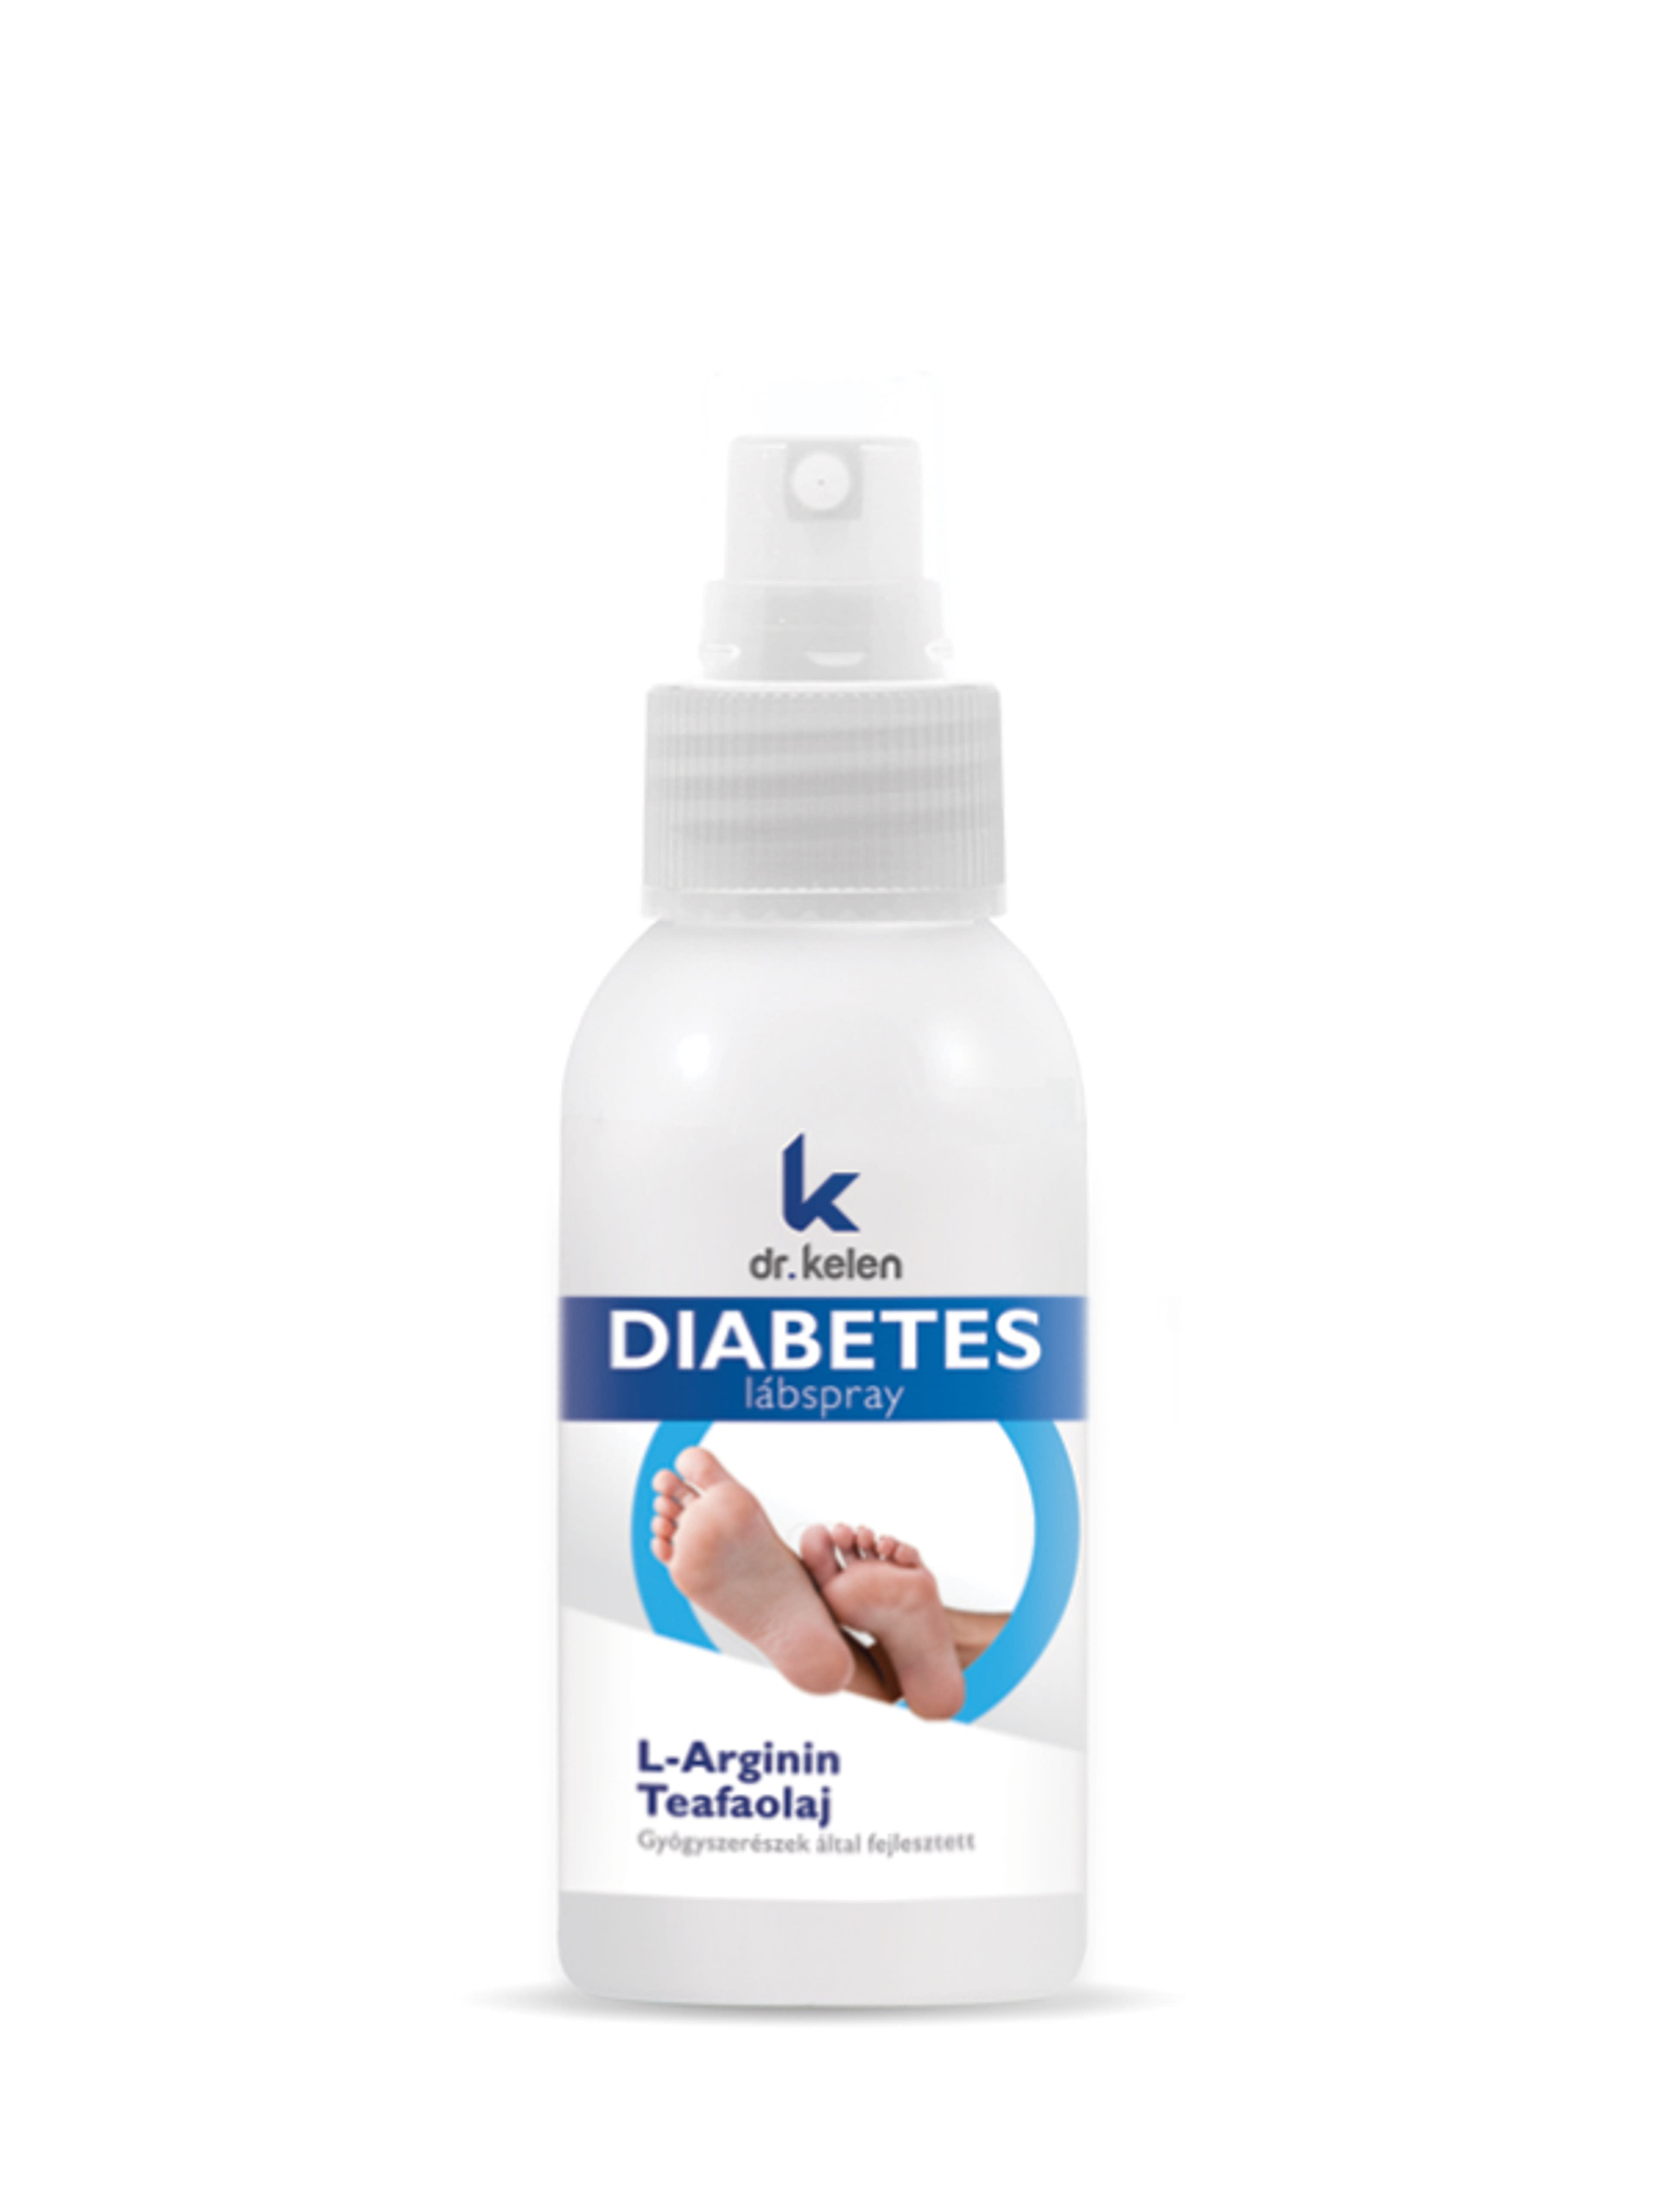 Dr. Kelen labspray diabetes - 100 ml-1